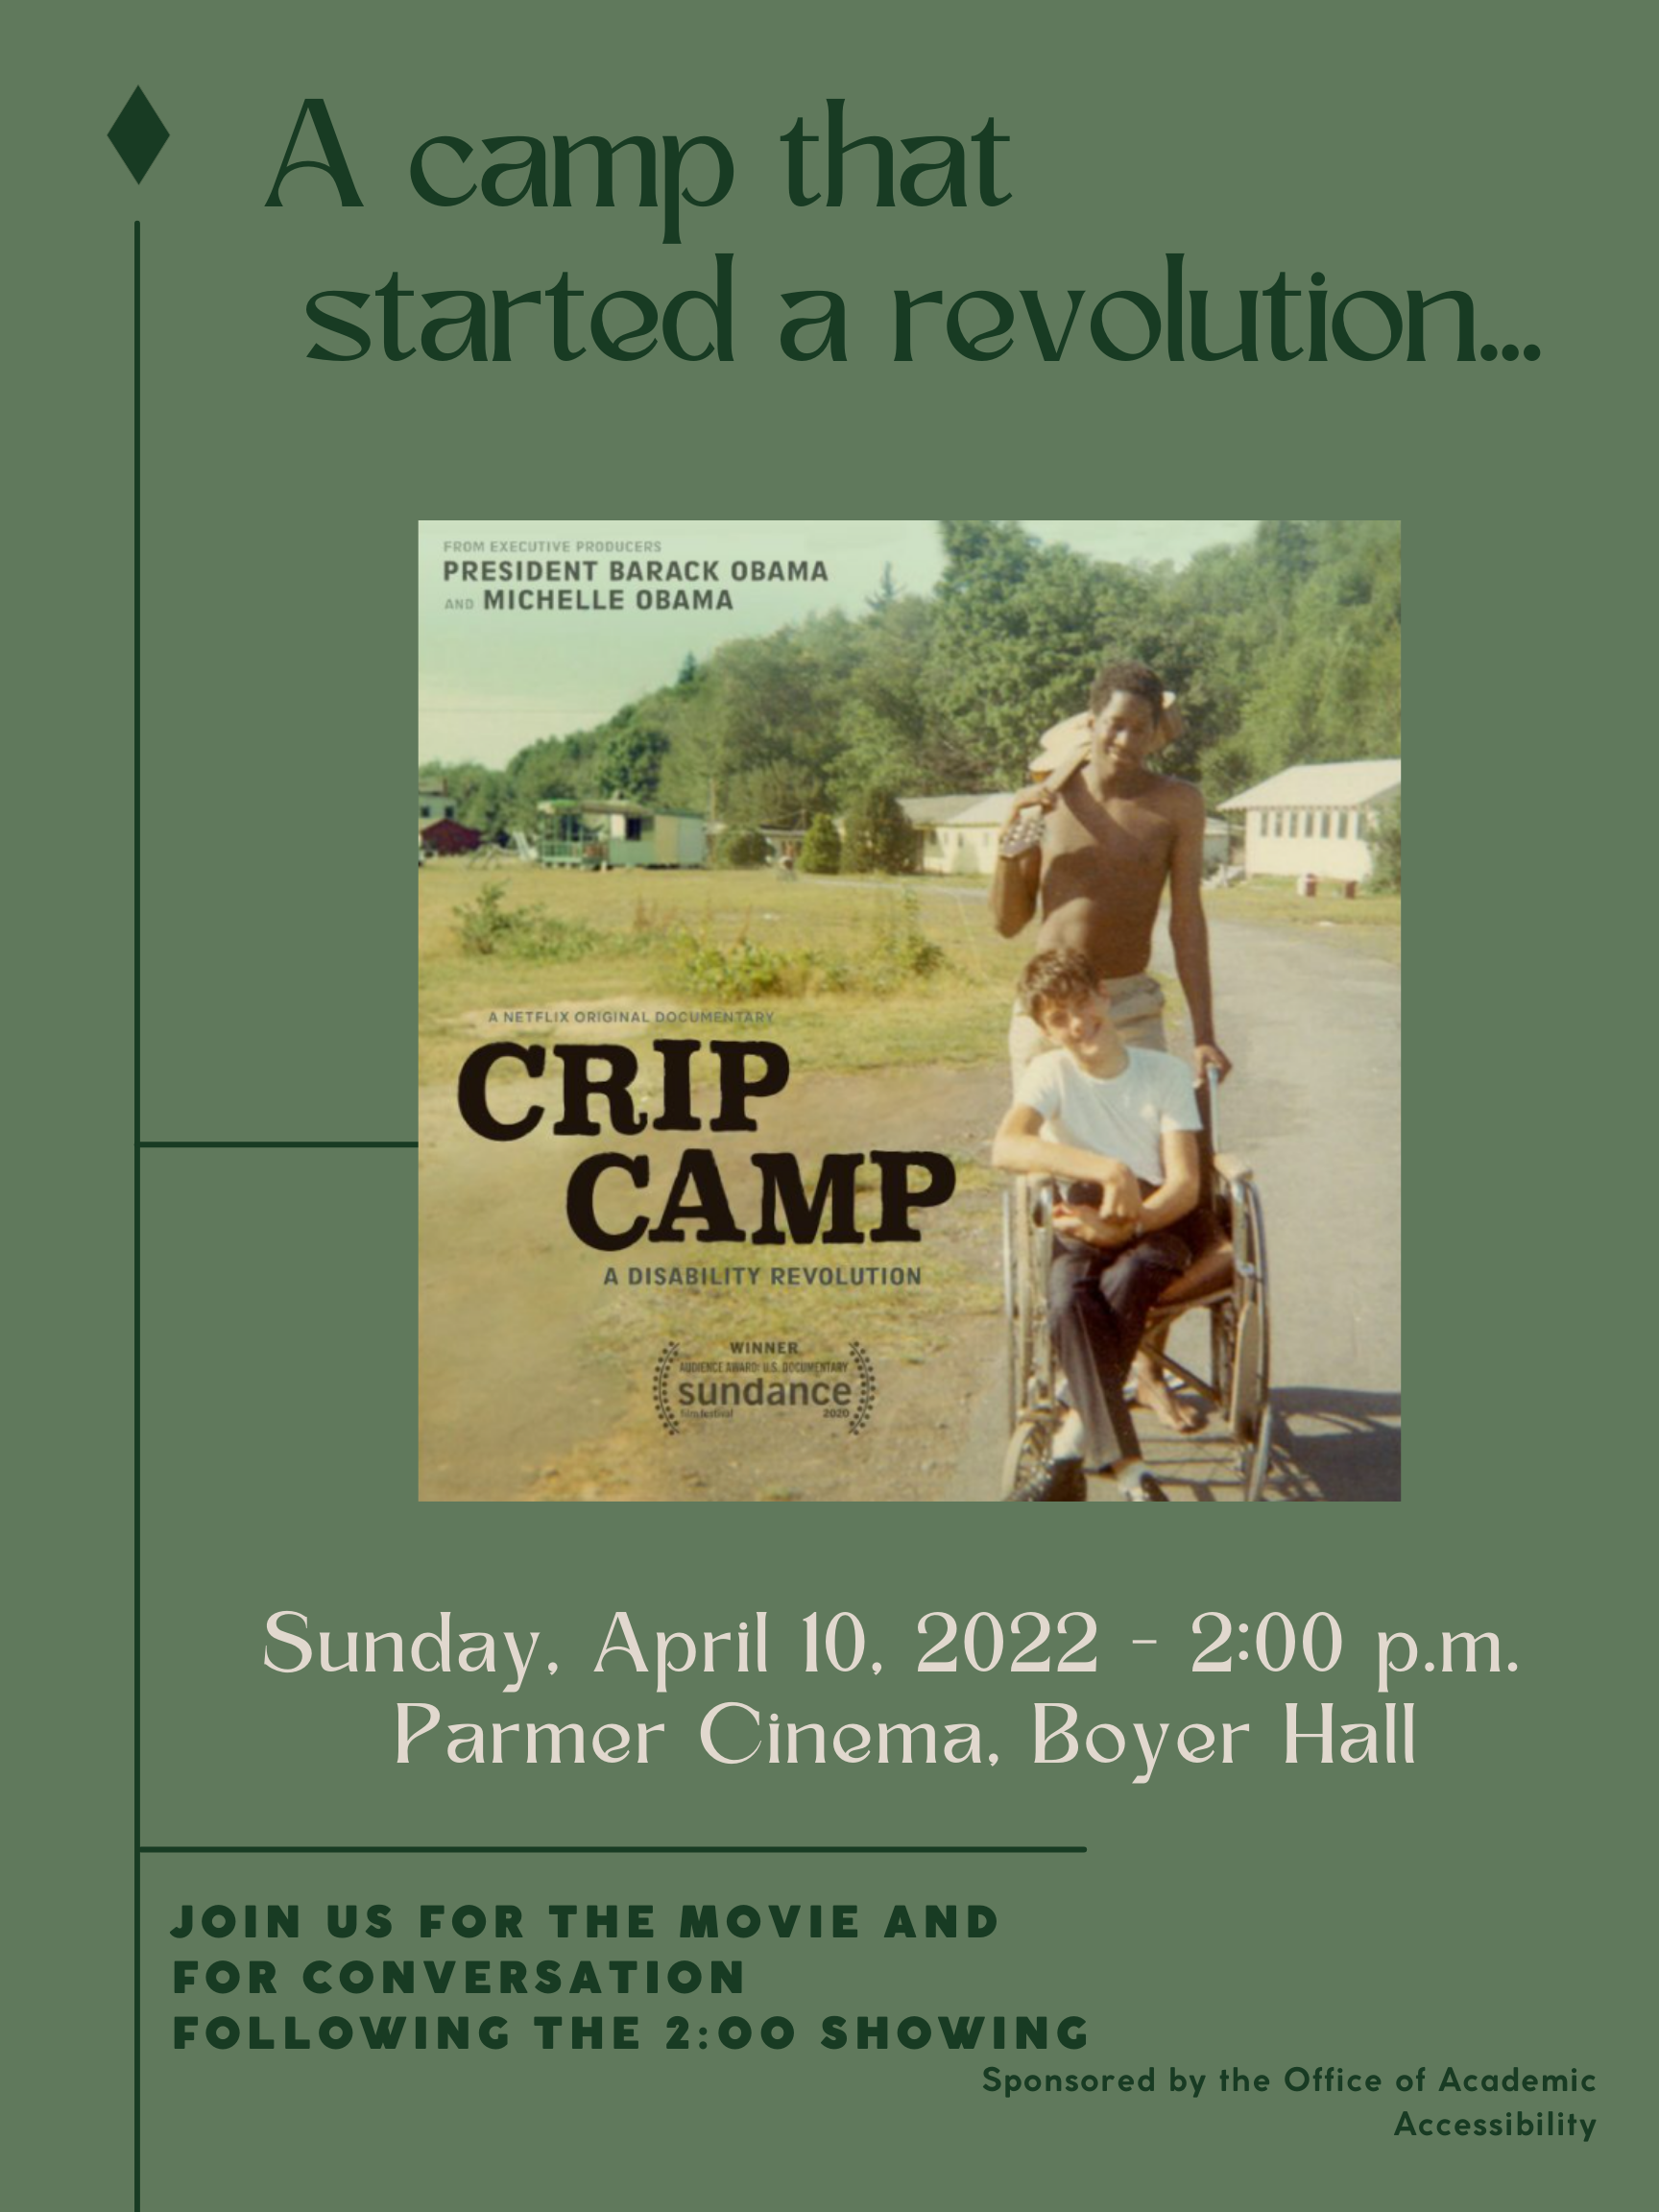 Crip camp poster